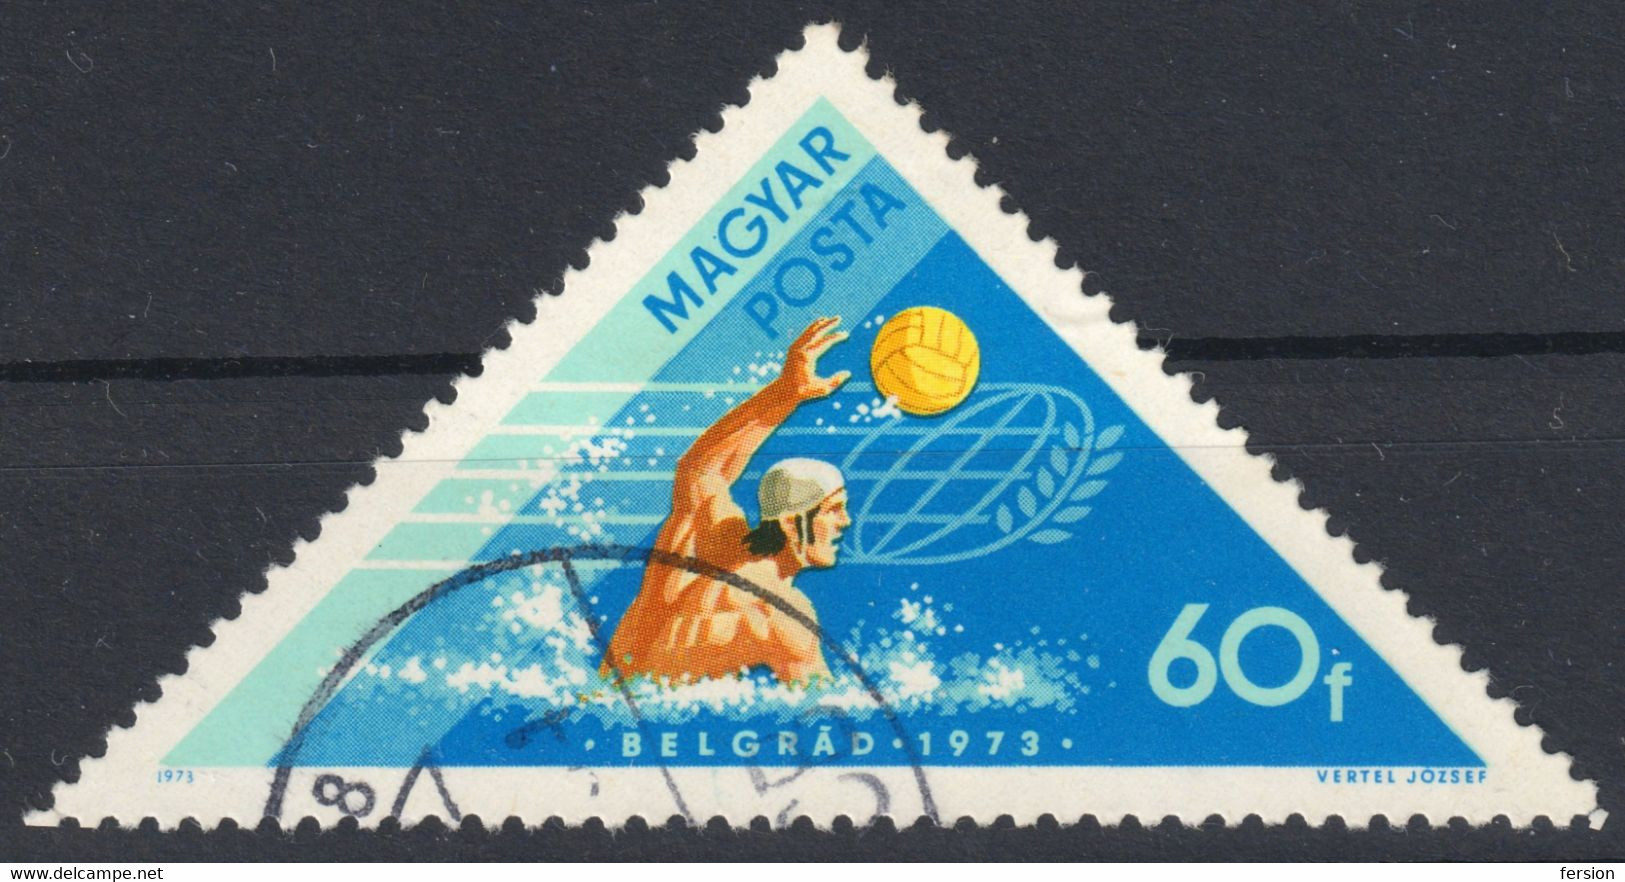 TRIANGLE STAMP Water Polo HUNGARY 1973 World Aquatics Championships Belgrade Yugoslavia - Wasserball